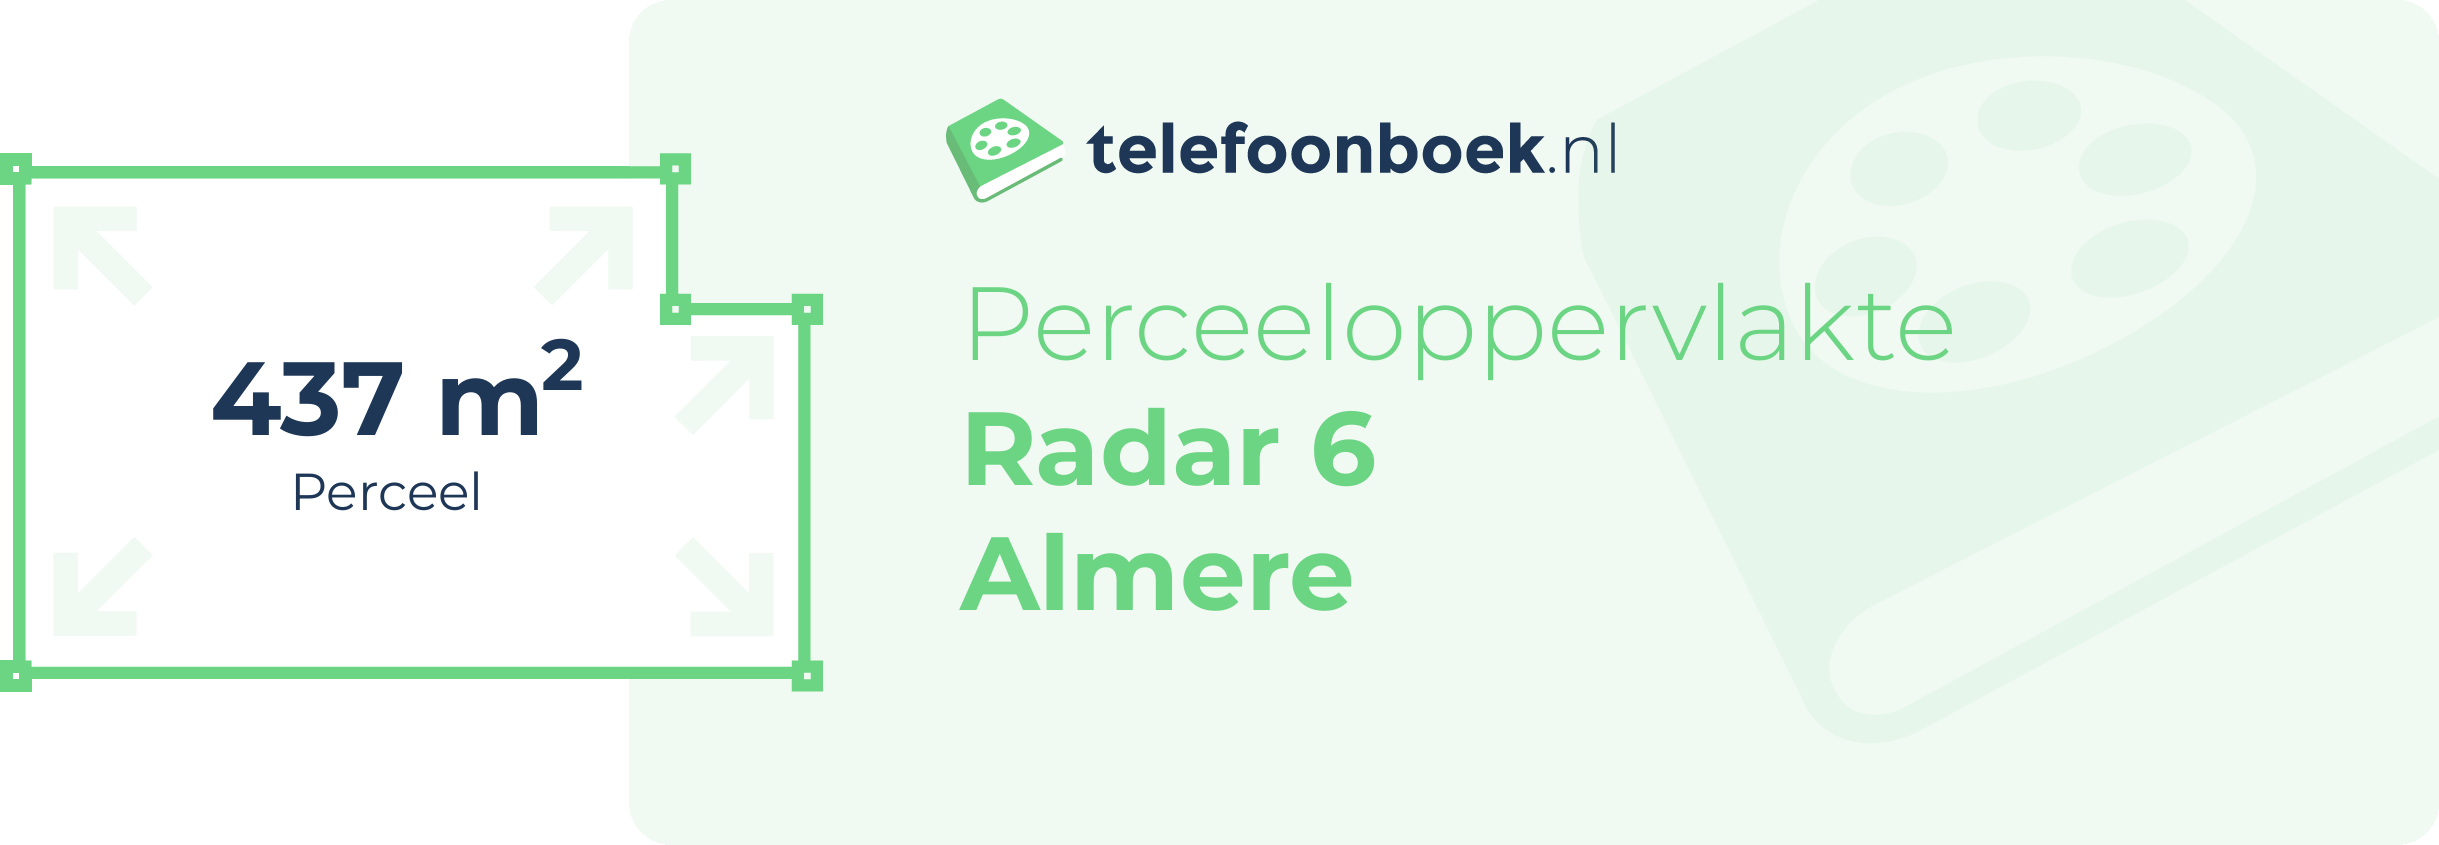 Perceeloppervlakte Radar 6 Almere